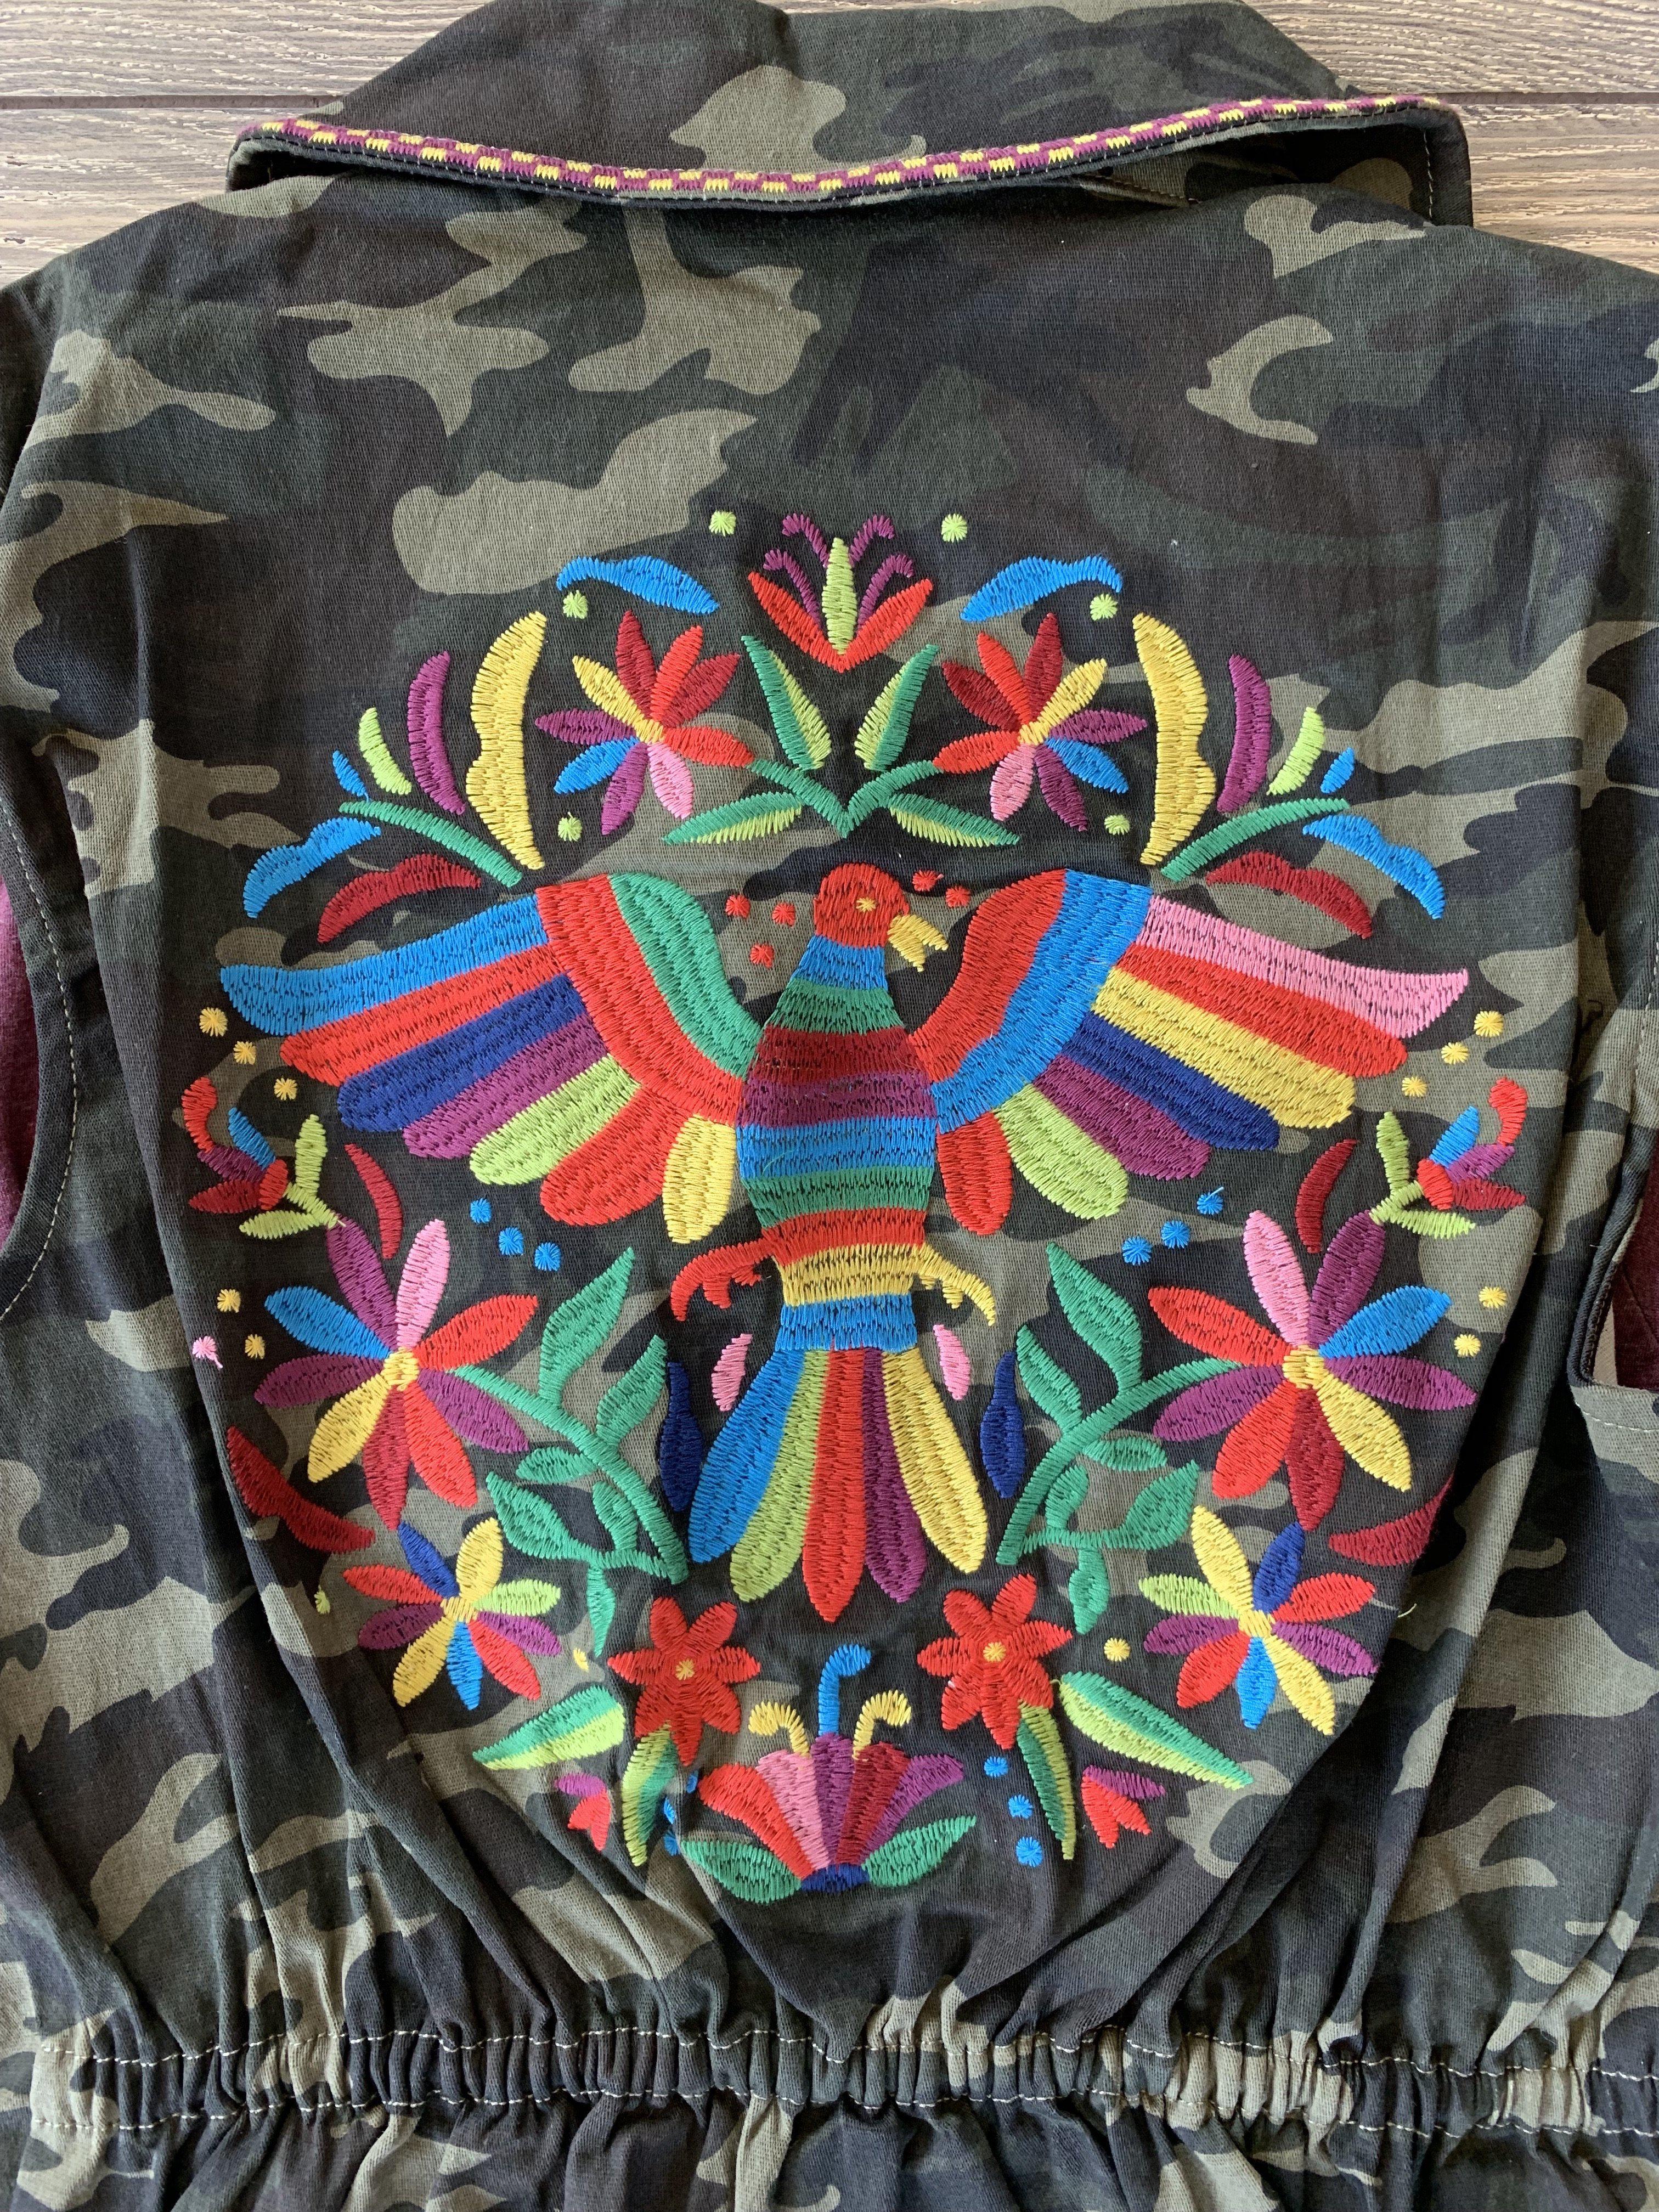 The Tatum Camo Embroidered Vest